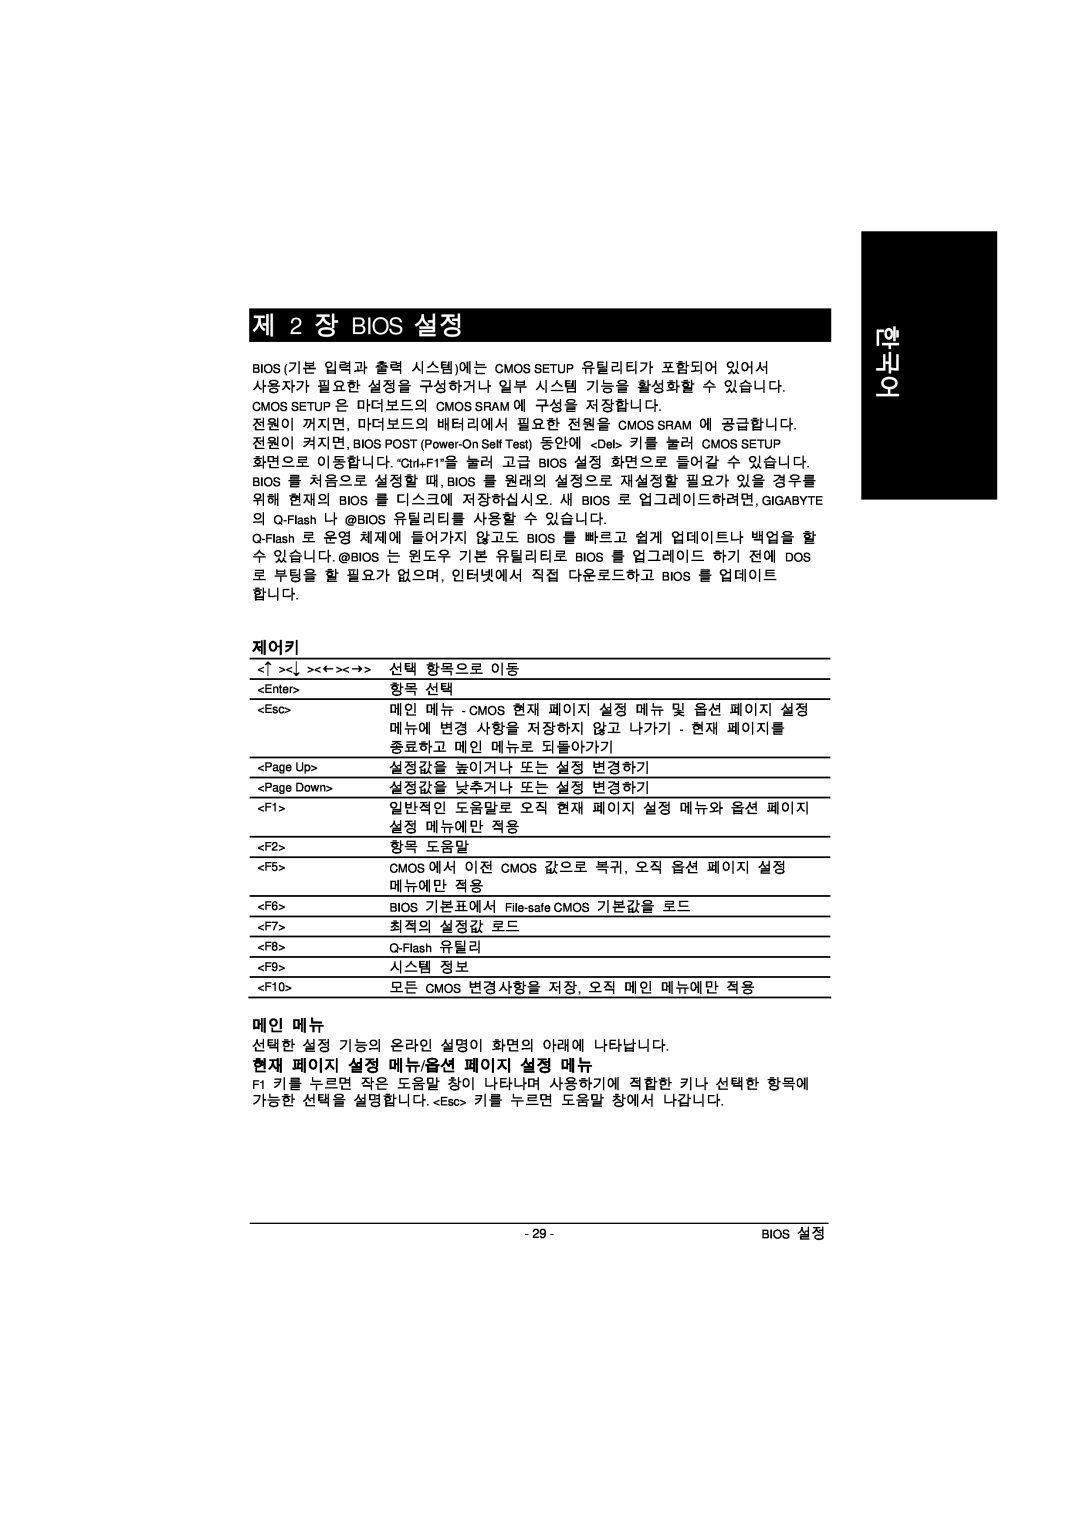 Intel GA-8IPE1000 manual 제 2 장 BIOS 설정, 메인 메뉴, 현재 페이지 설정 메뉴/옵션 페이지 설정 메뉴 